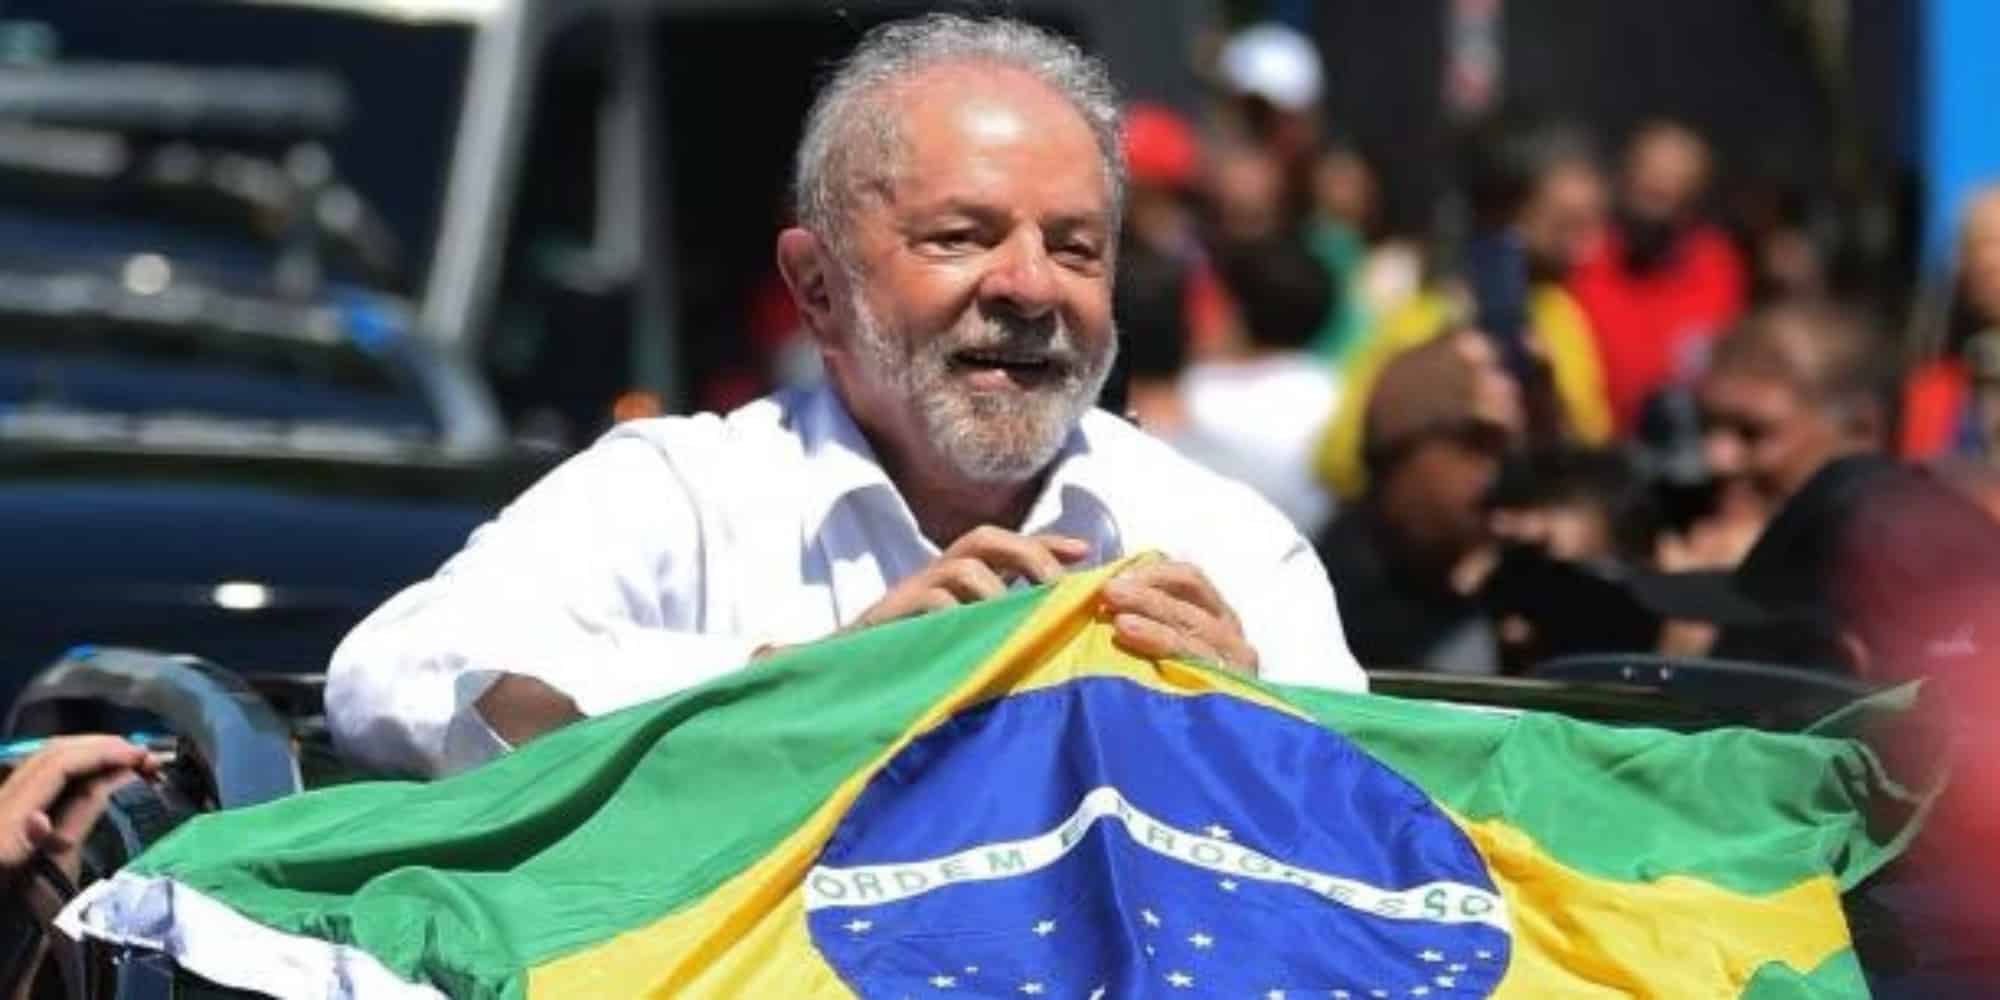 O νέος πρόεδρος της Βραζιλίας, Λουίς Ινάσιου Λούλα ντα Σίλβα